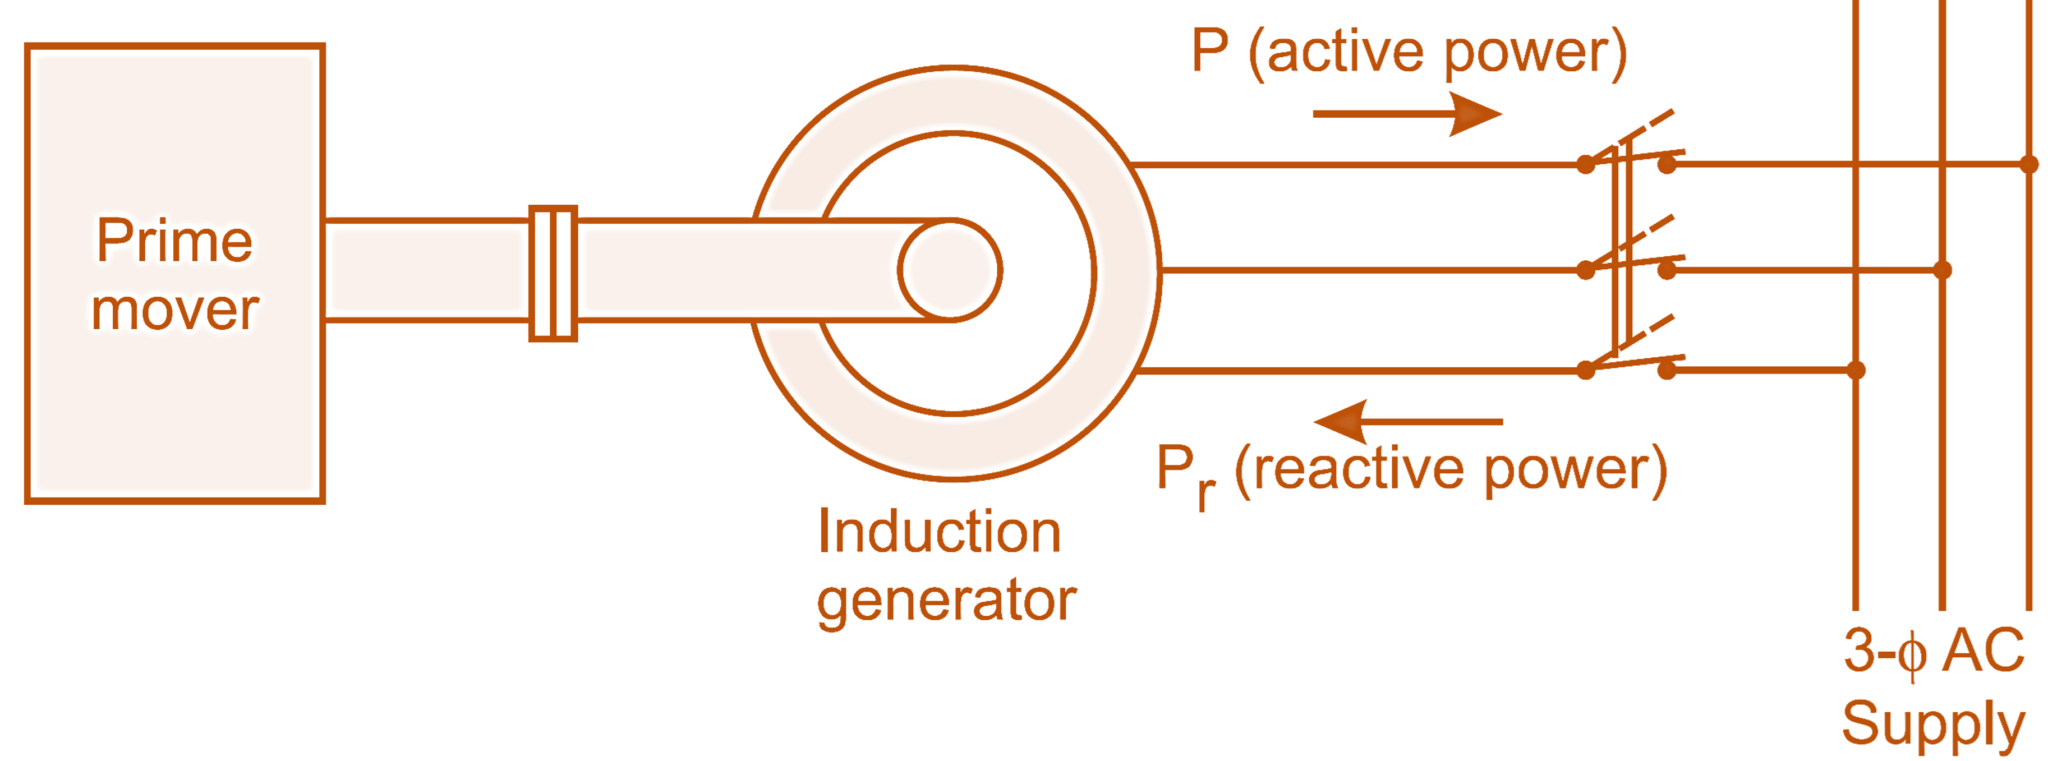 Induction Generator - Construction, Diagram, Torque Slip Characteristics, Advantages & - ElectricalWorkbook